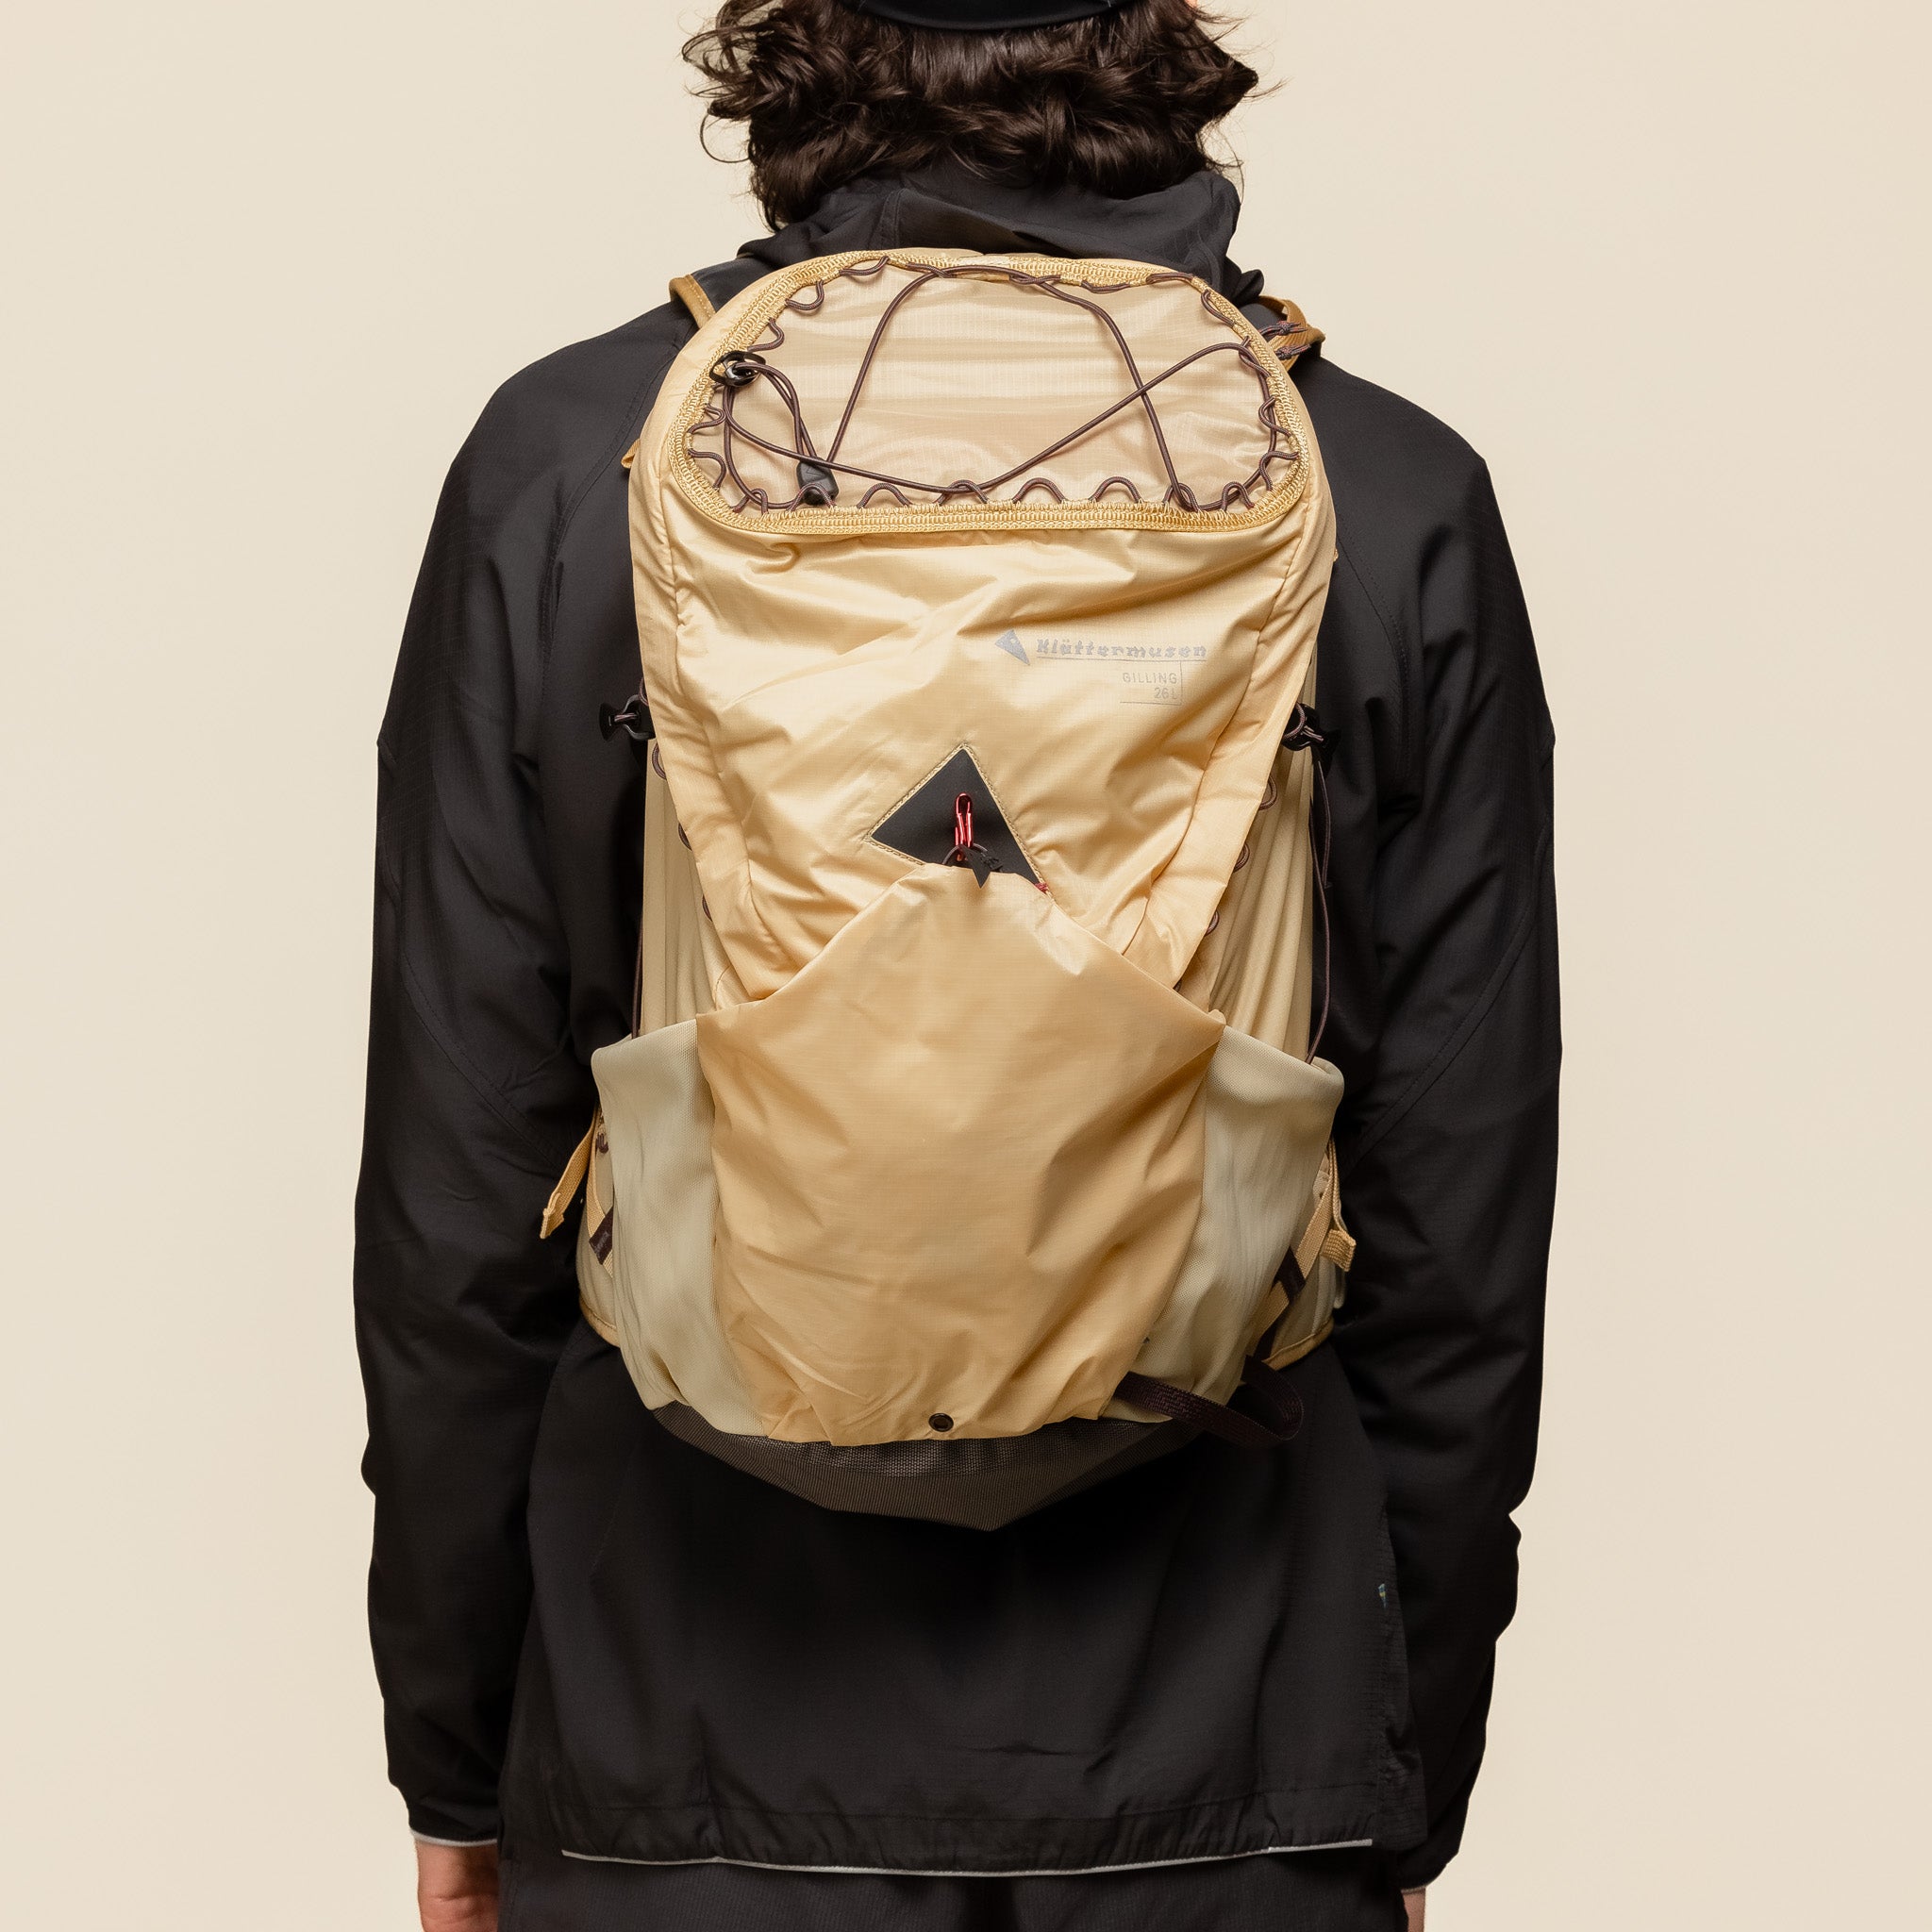 Klättermusen - Gilling Backpack 26L - Chaya Sand